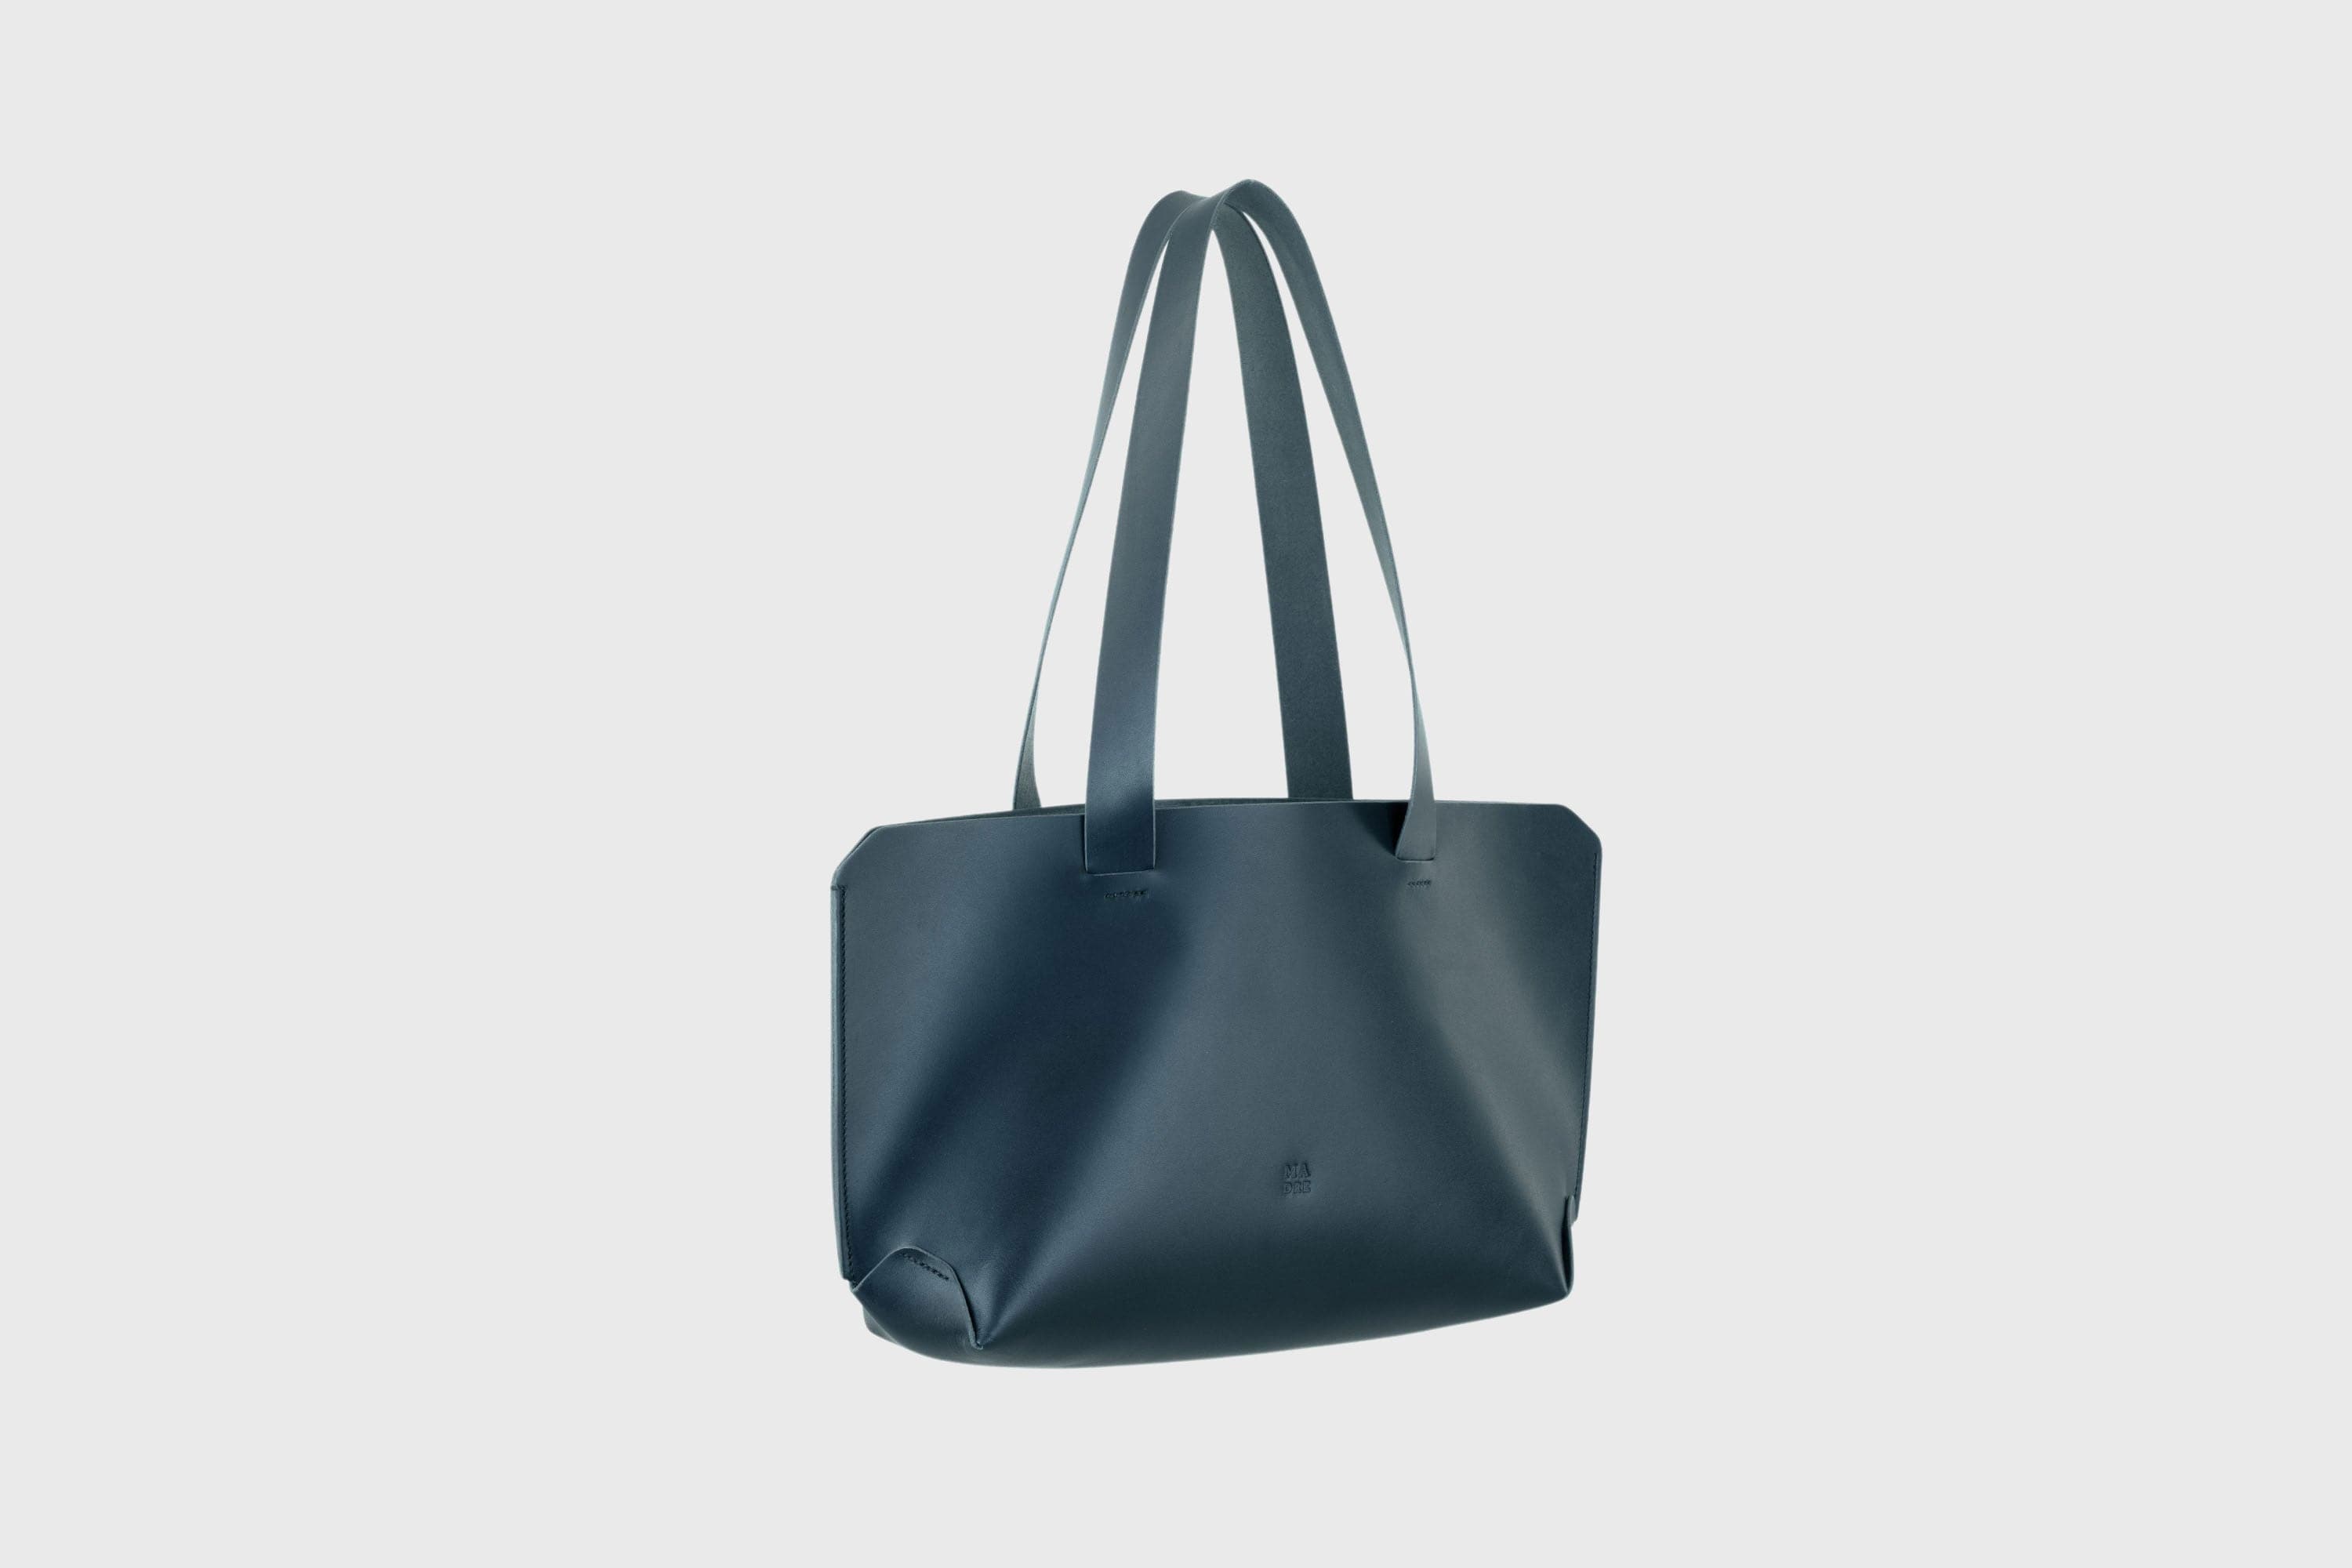 Tote Bag Marine Blue Vegetable Tanned Leather Minimalistic Design By Manuel Dreesmann Atelier Madre Barcelona Spain